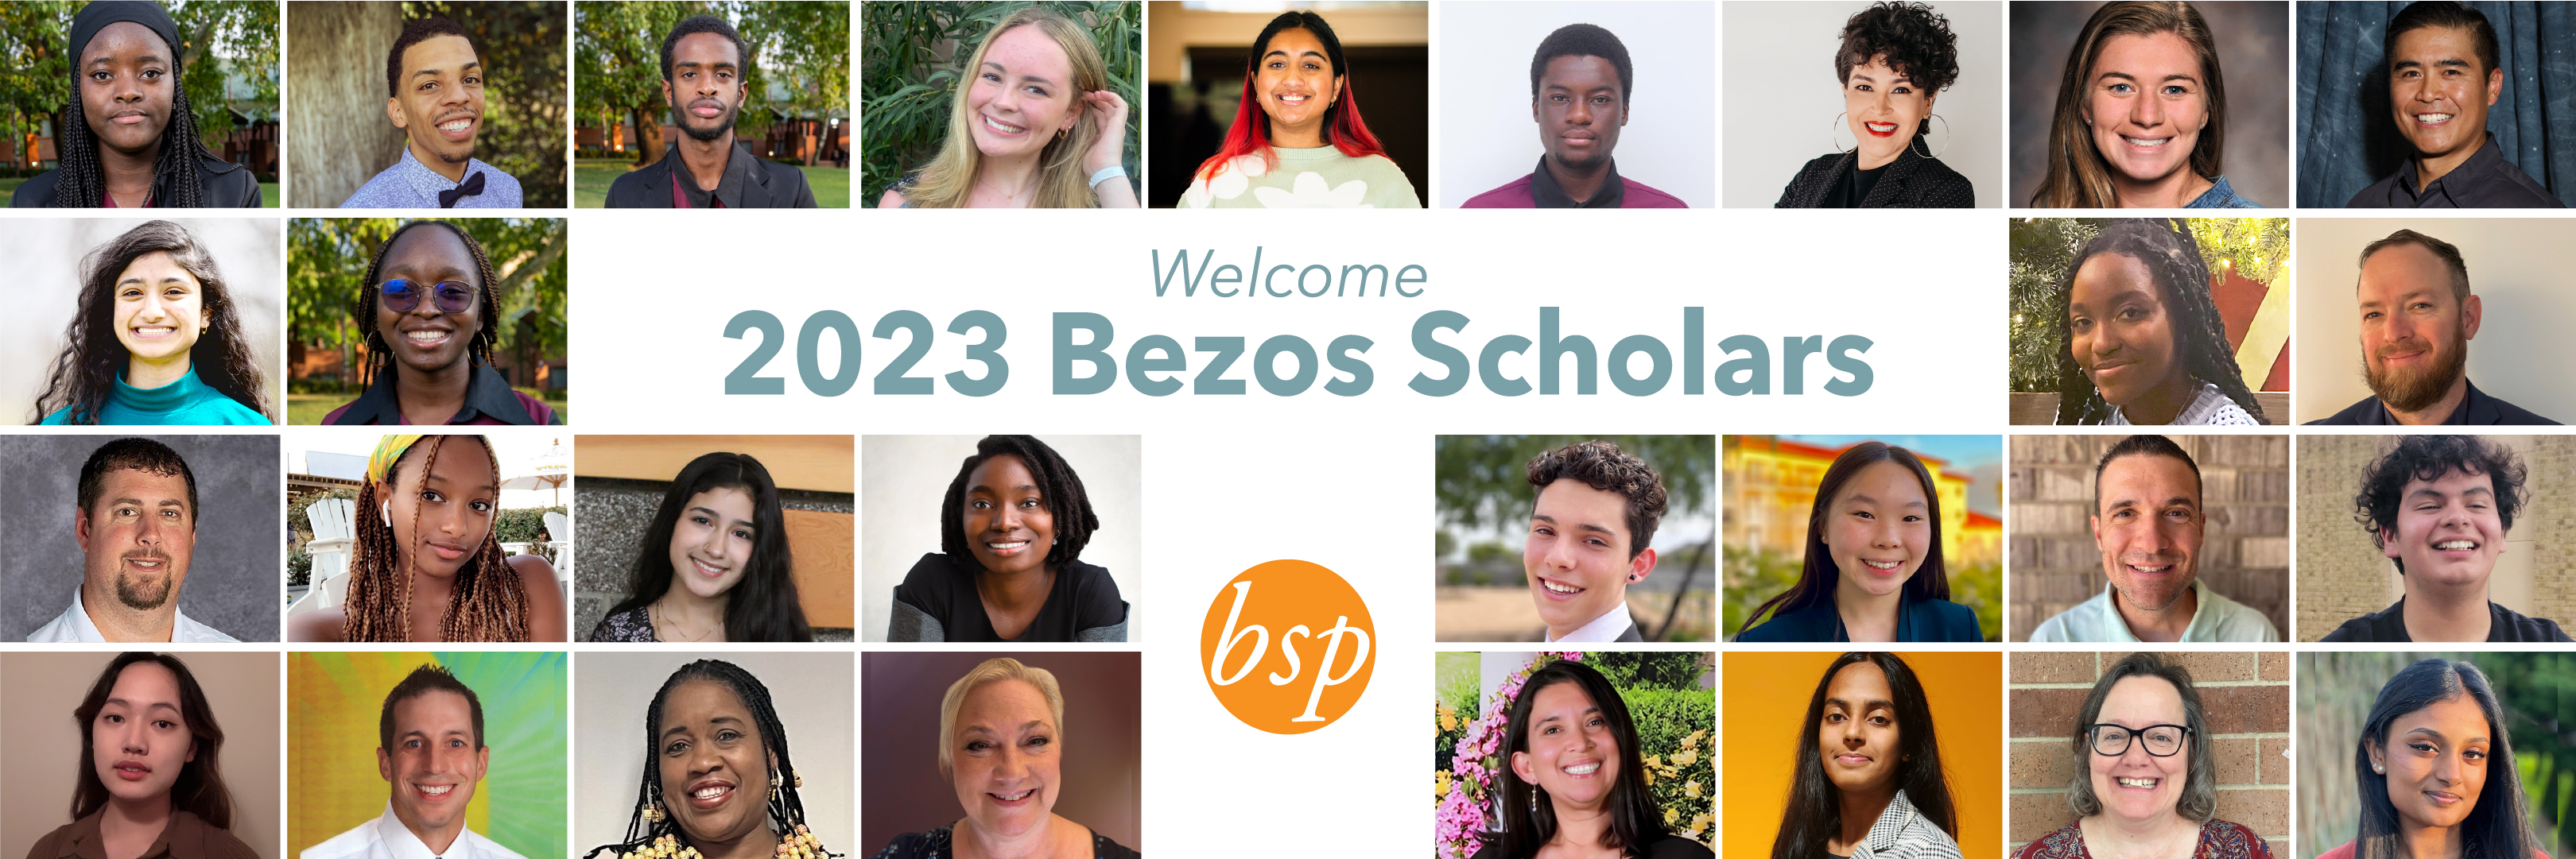 2023 Bezos Scholars Banner